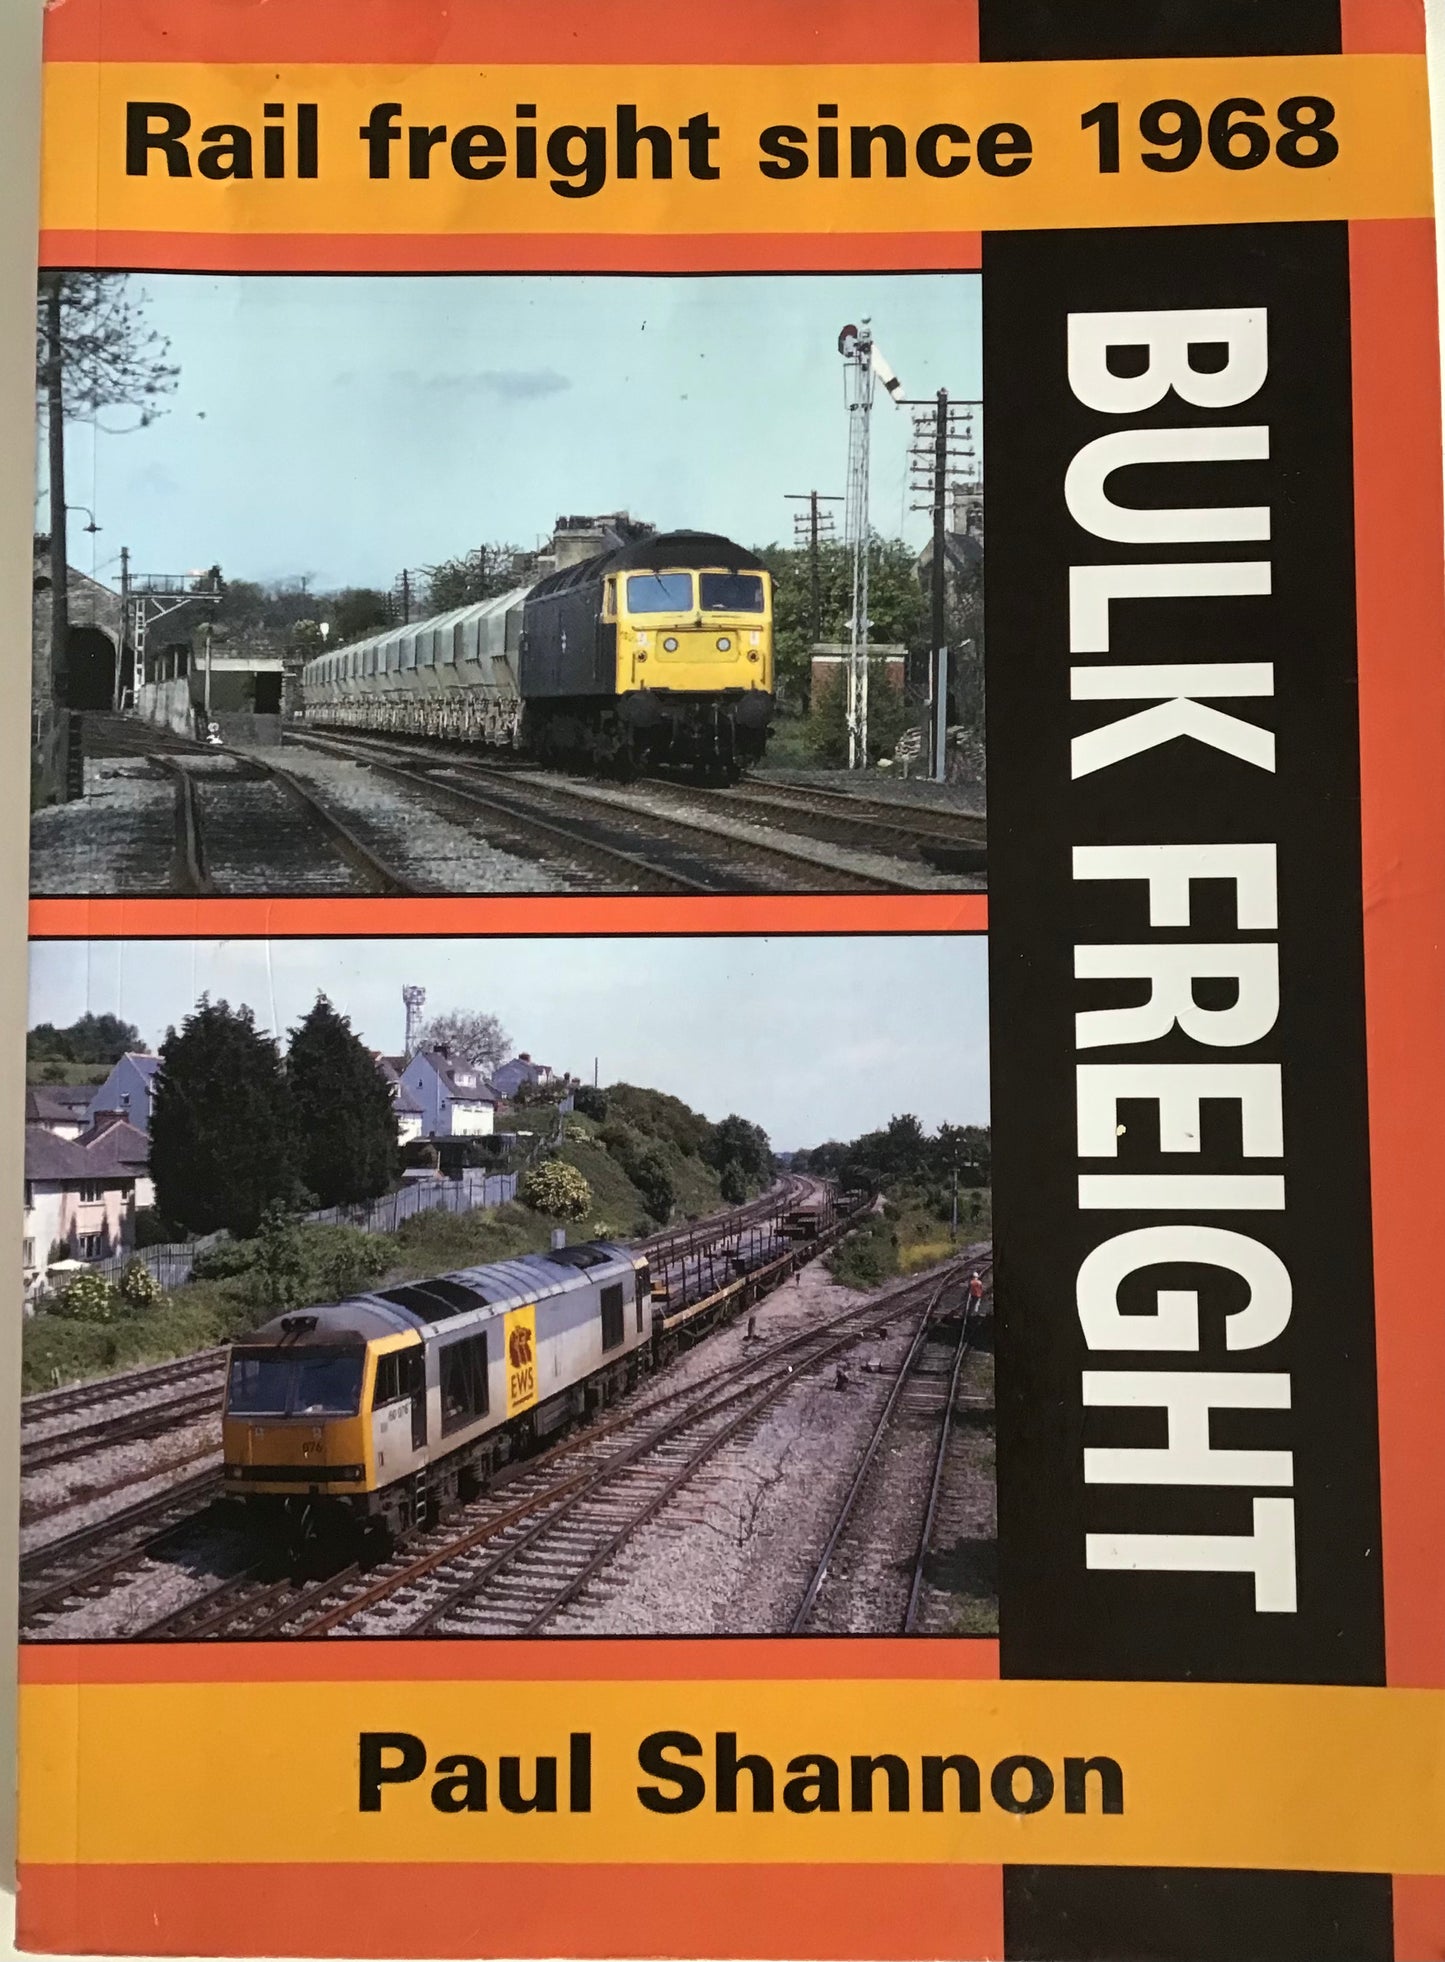 Rail freight since 1968 - Bulk Freight - Chester Model Centre